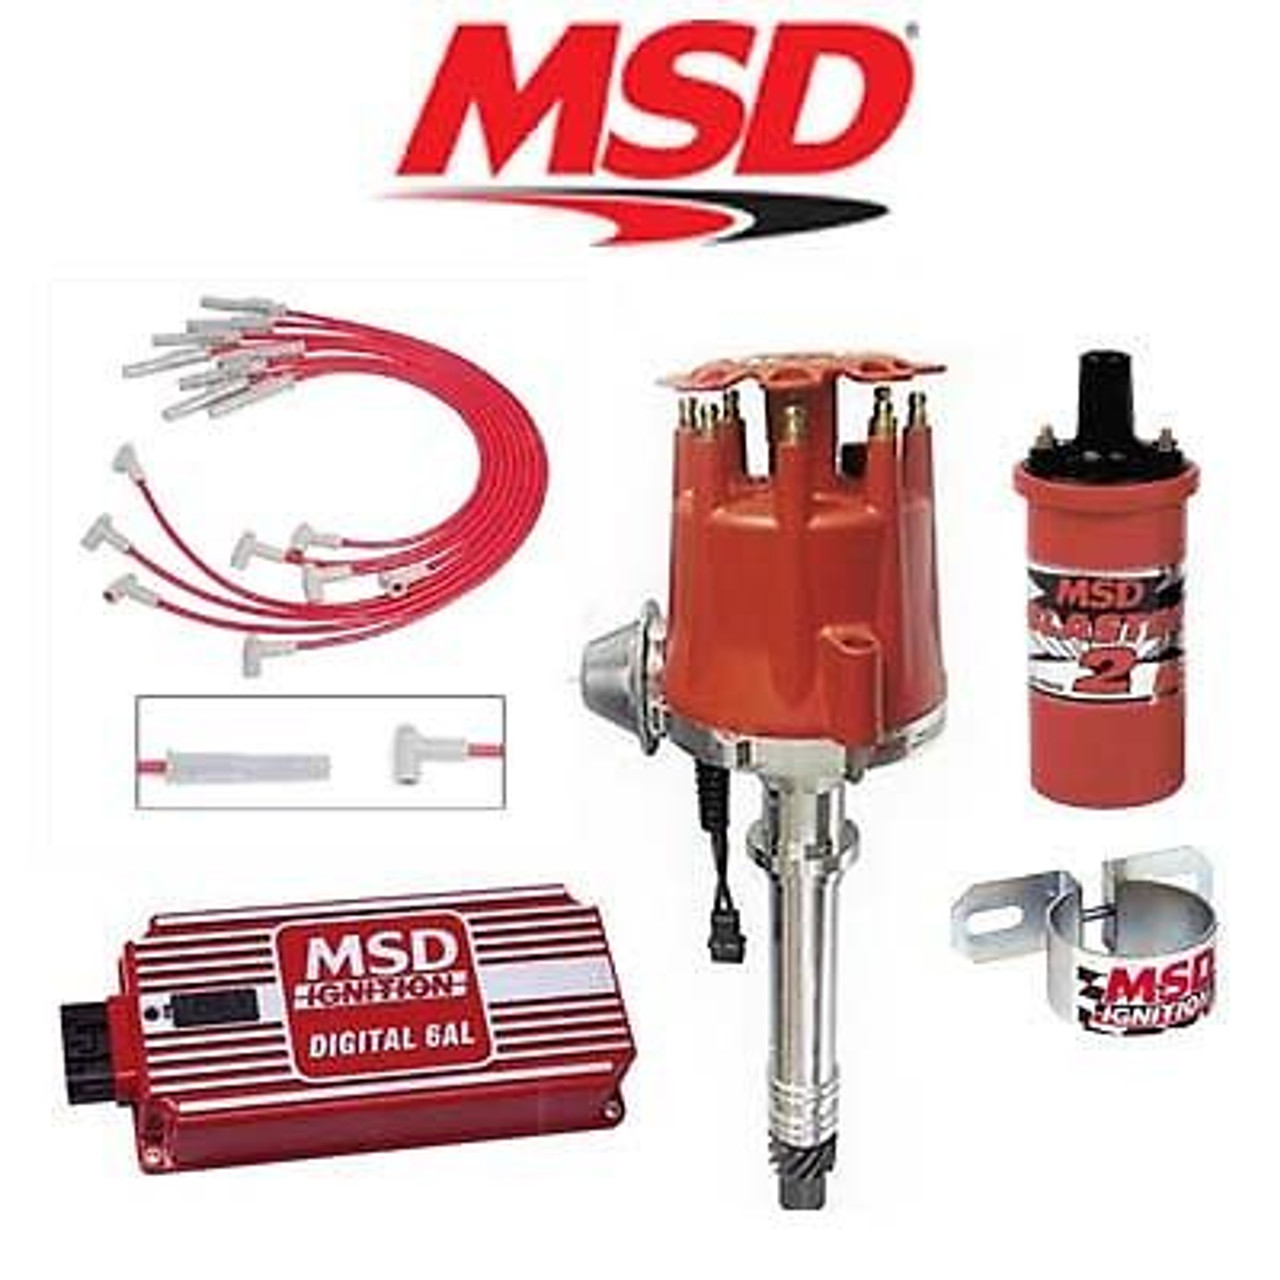 MSD 9011 Ignition Kit - Digital 6AL/Distributor/Wires/Coil/ - BBC Vacuum Advance